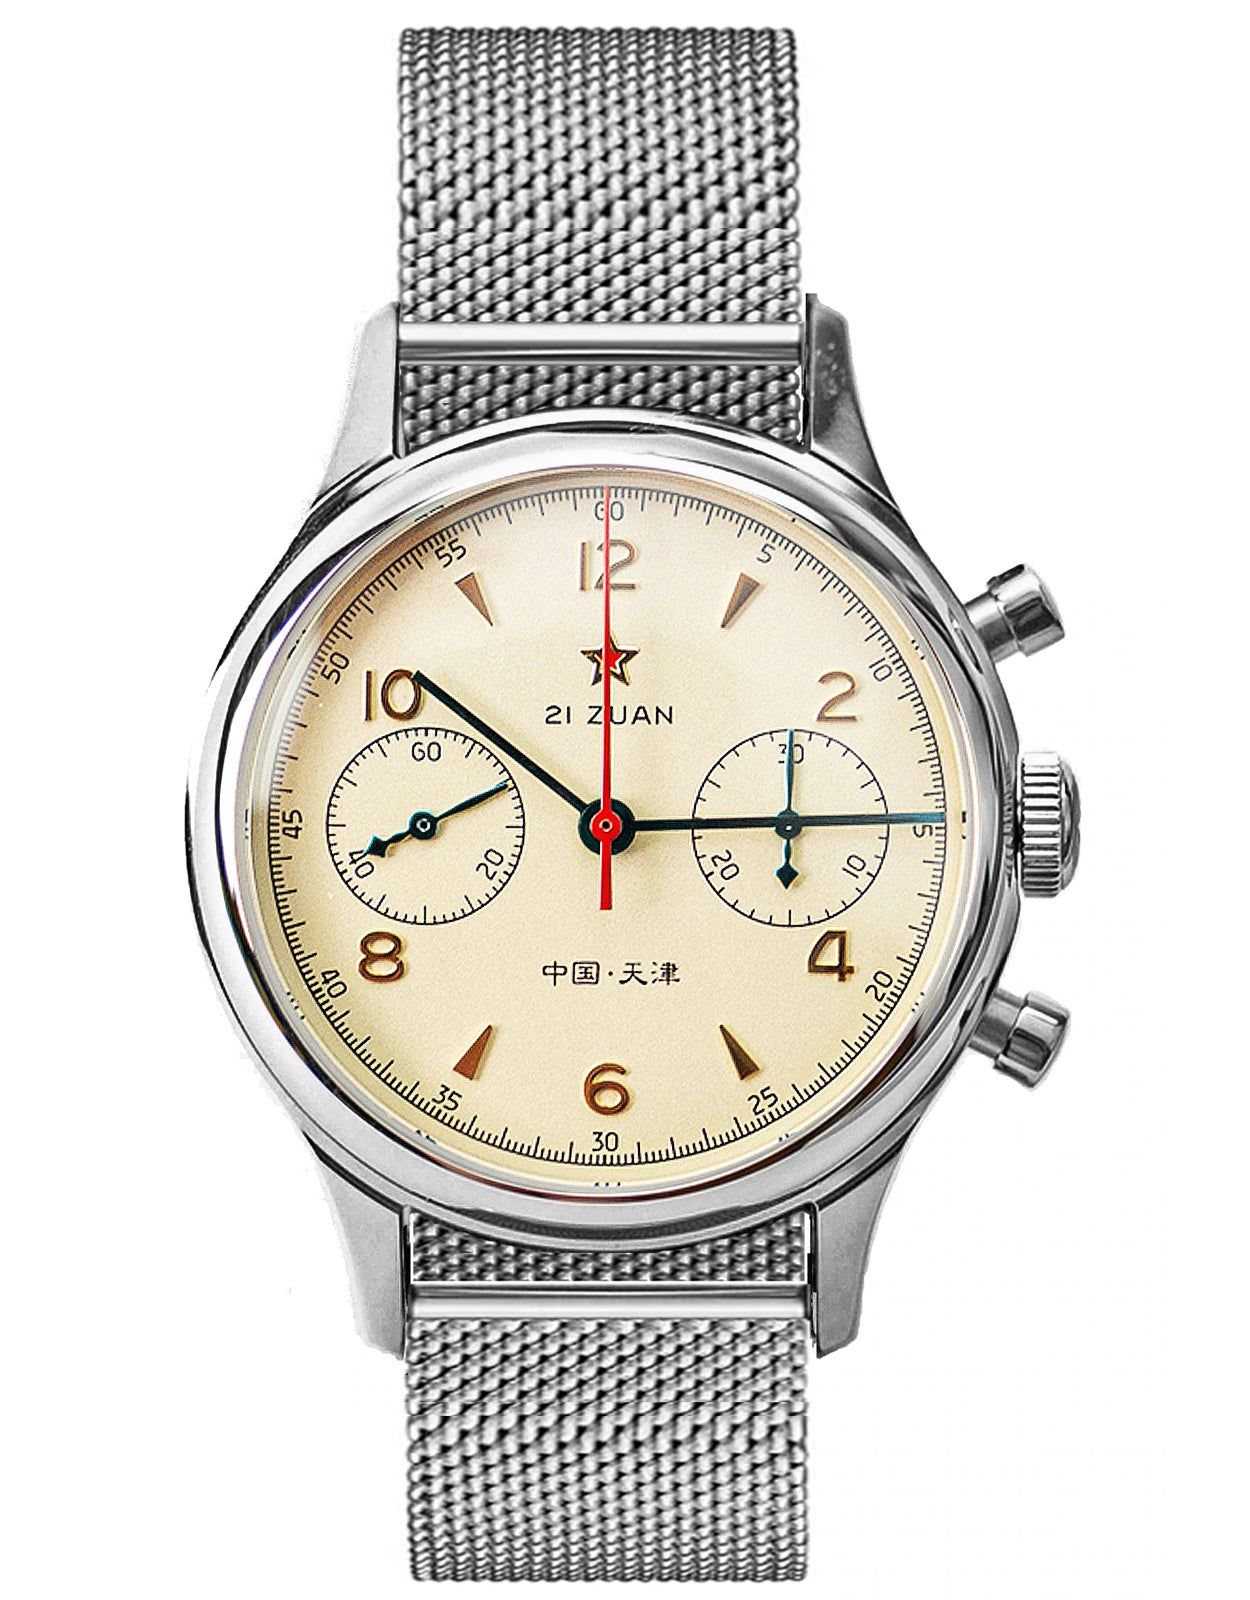 Luxury Men flyback function,chronograph watch L.U.C 1963 Heritage